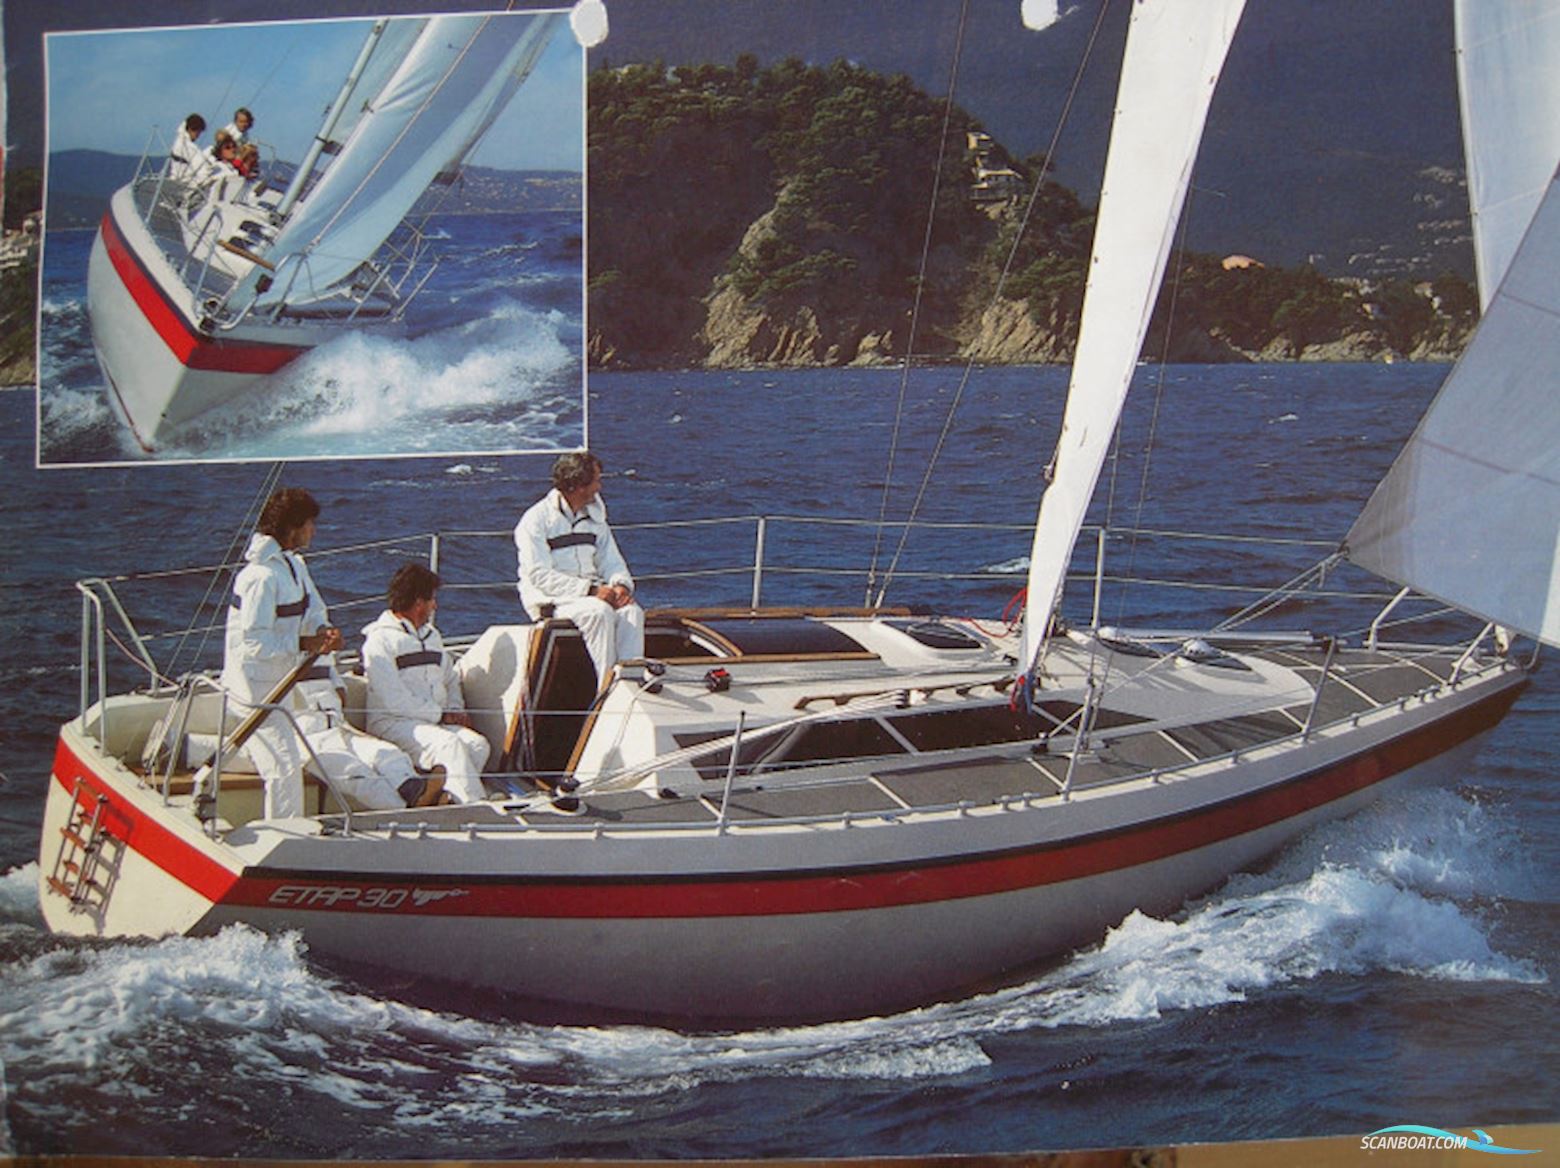 Etap 30 Segelboot 1986, mit Volvo Penta 2002 motor, Deutschland